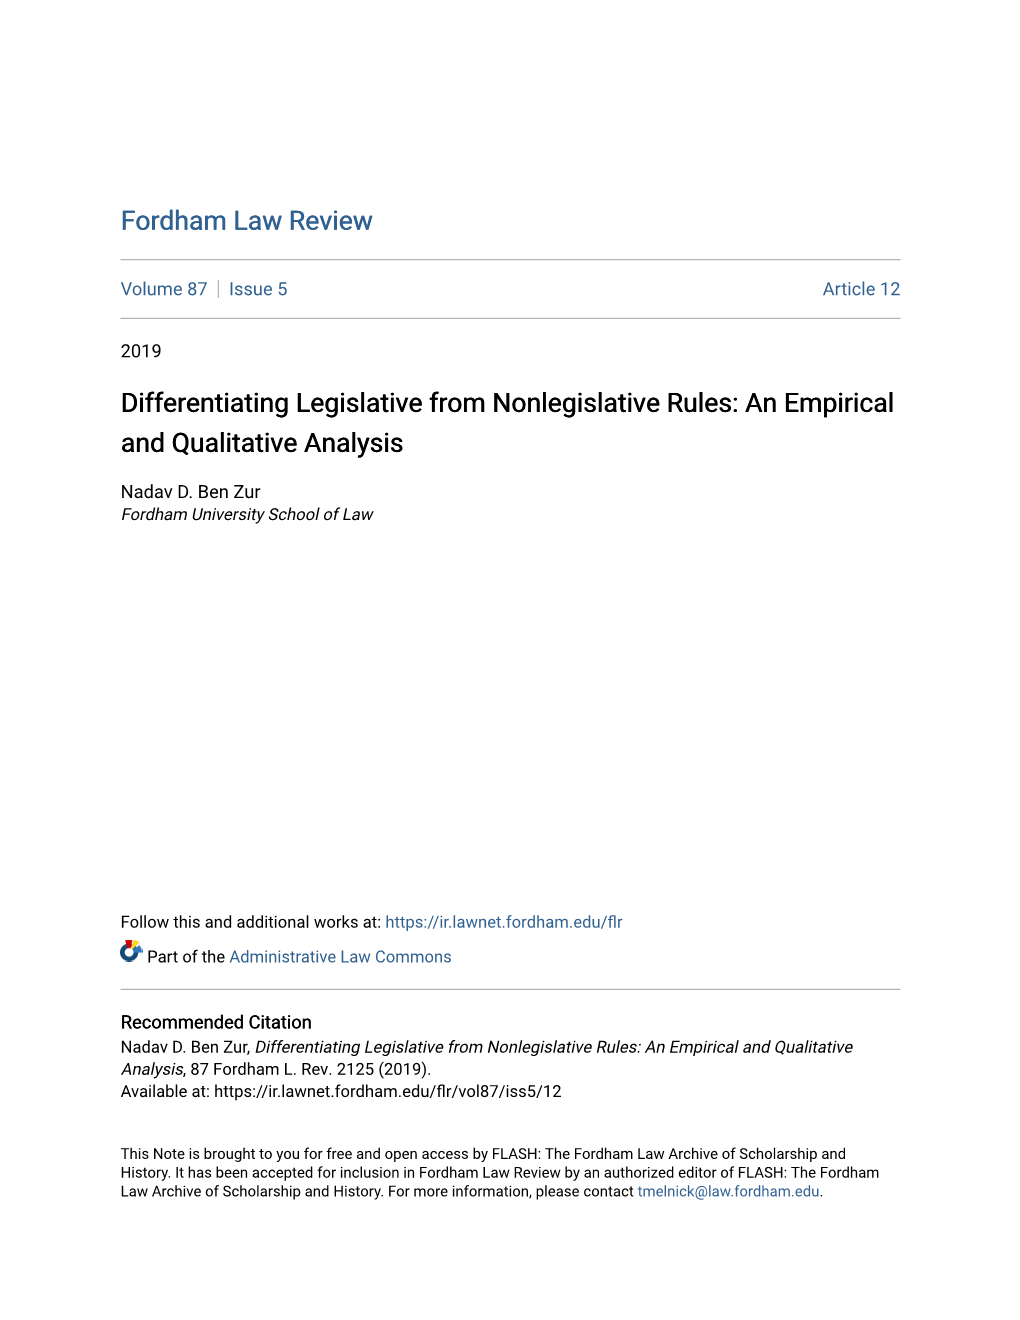 Differentiating Legislative from Nonlegislative Rules: an Empirical and Qualitative Analysis